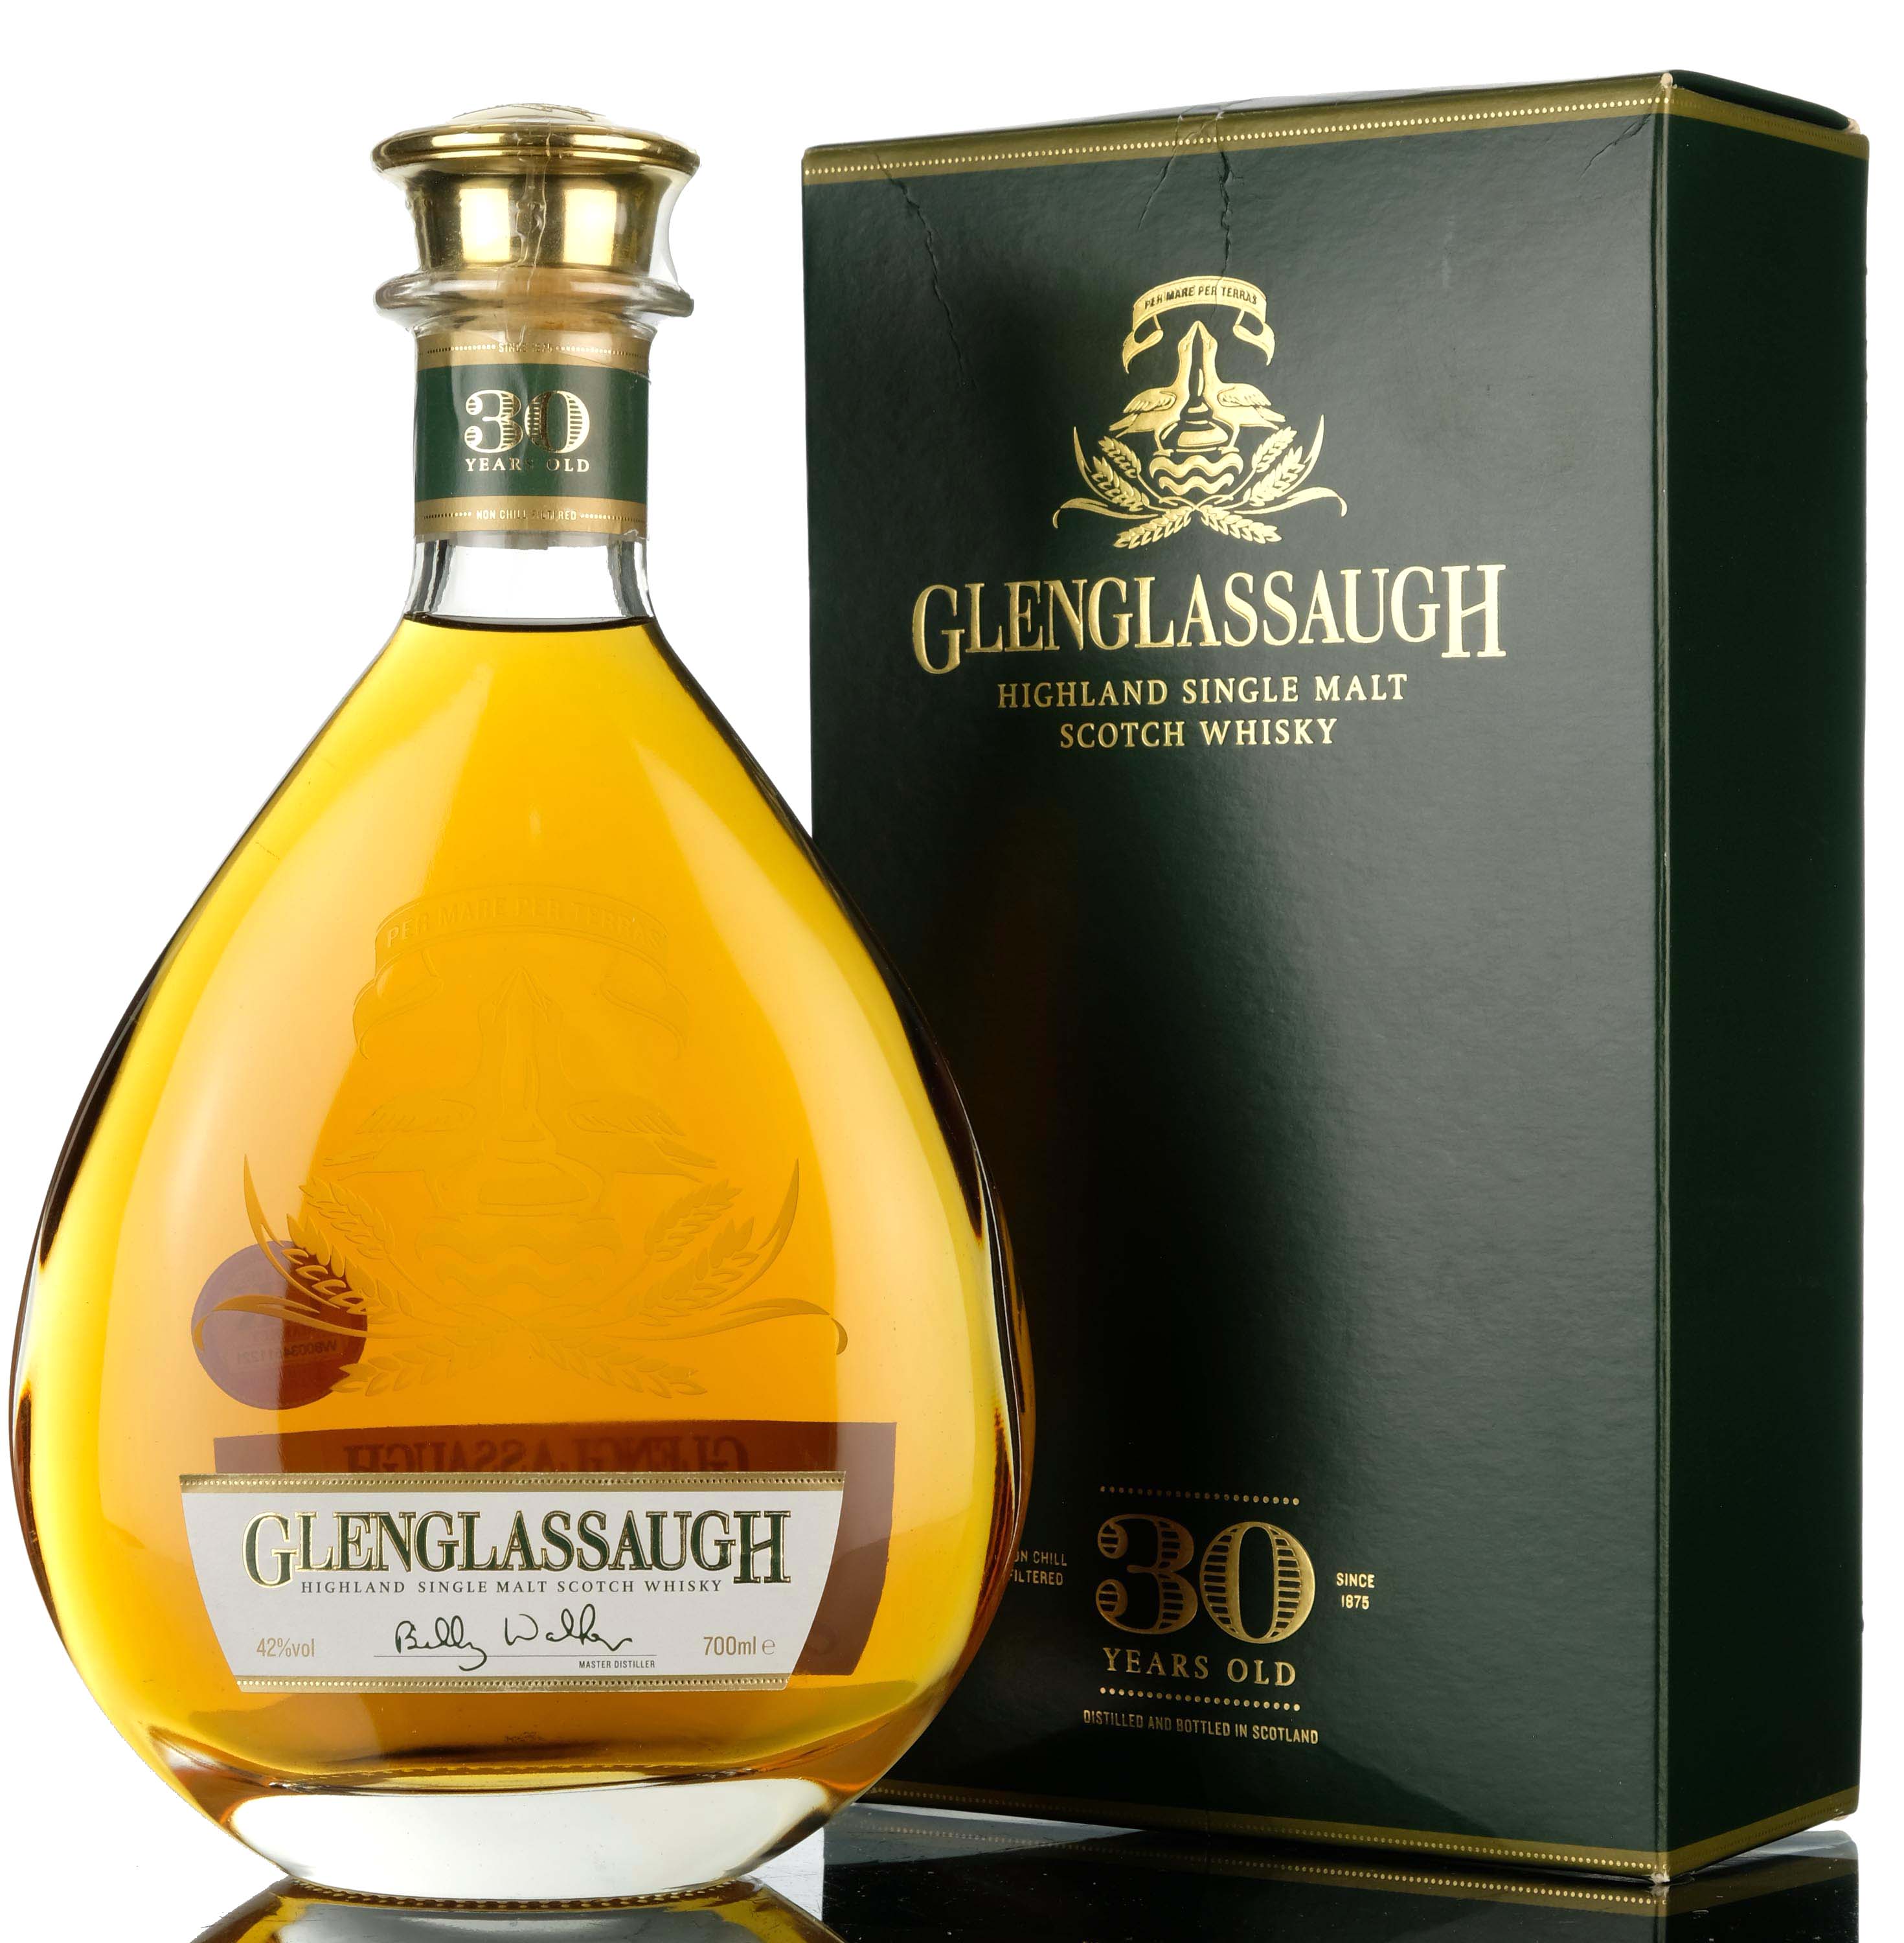 Glenglassaugh 30 Year Old